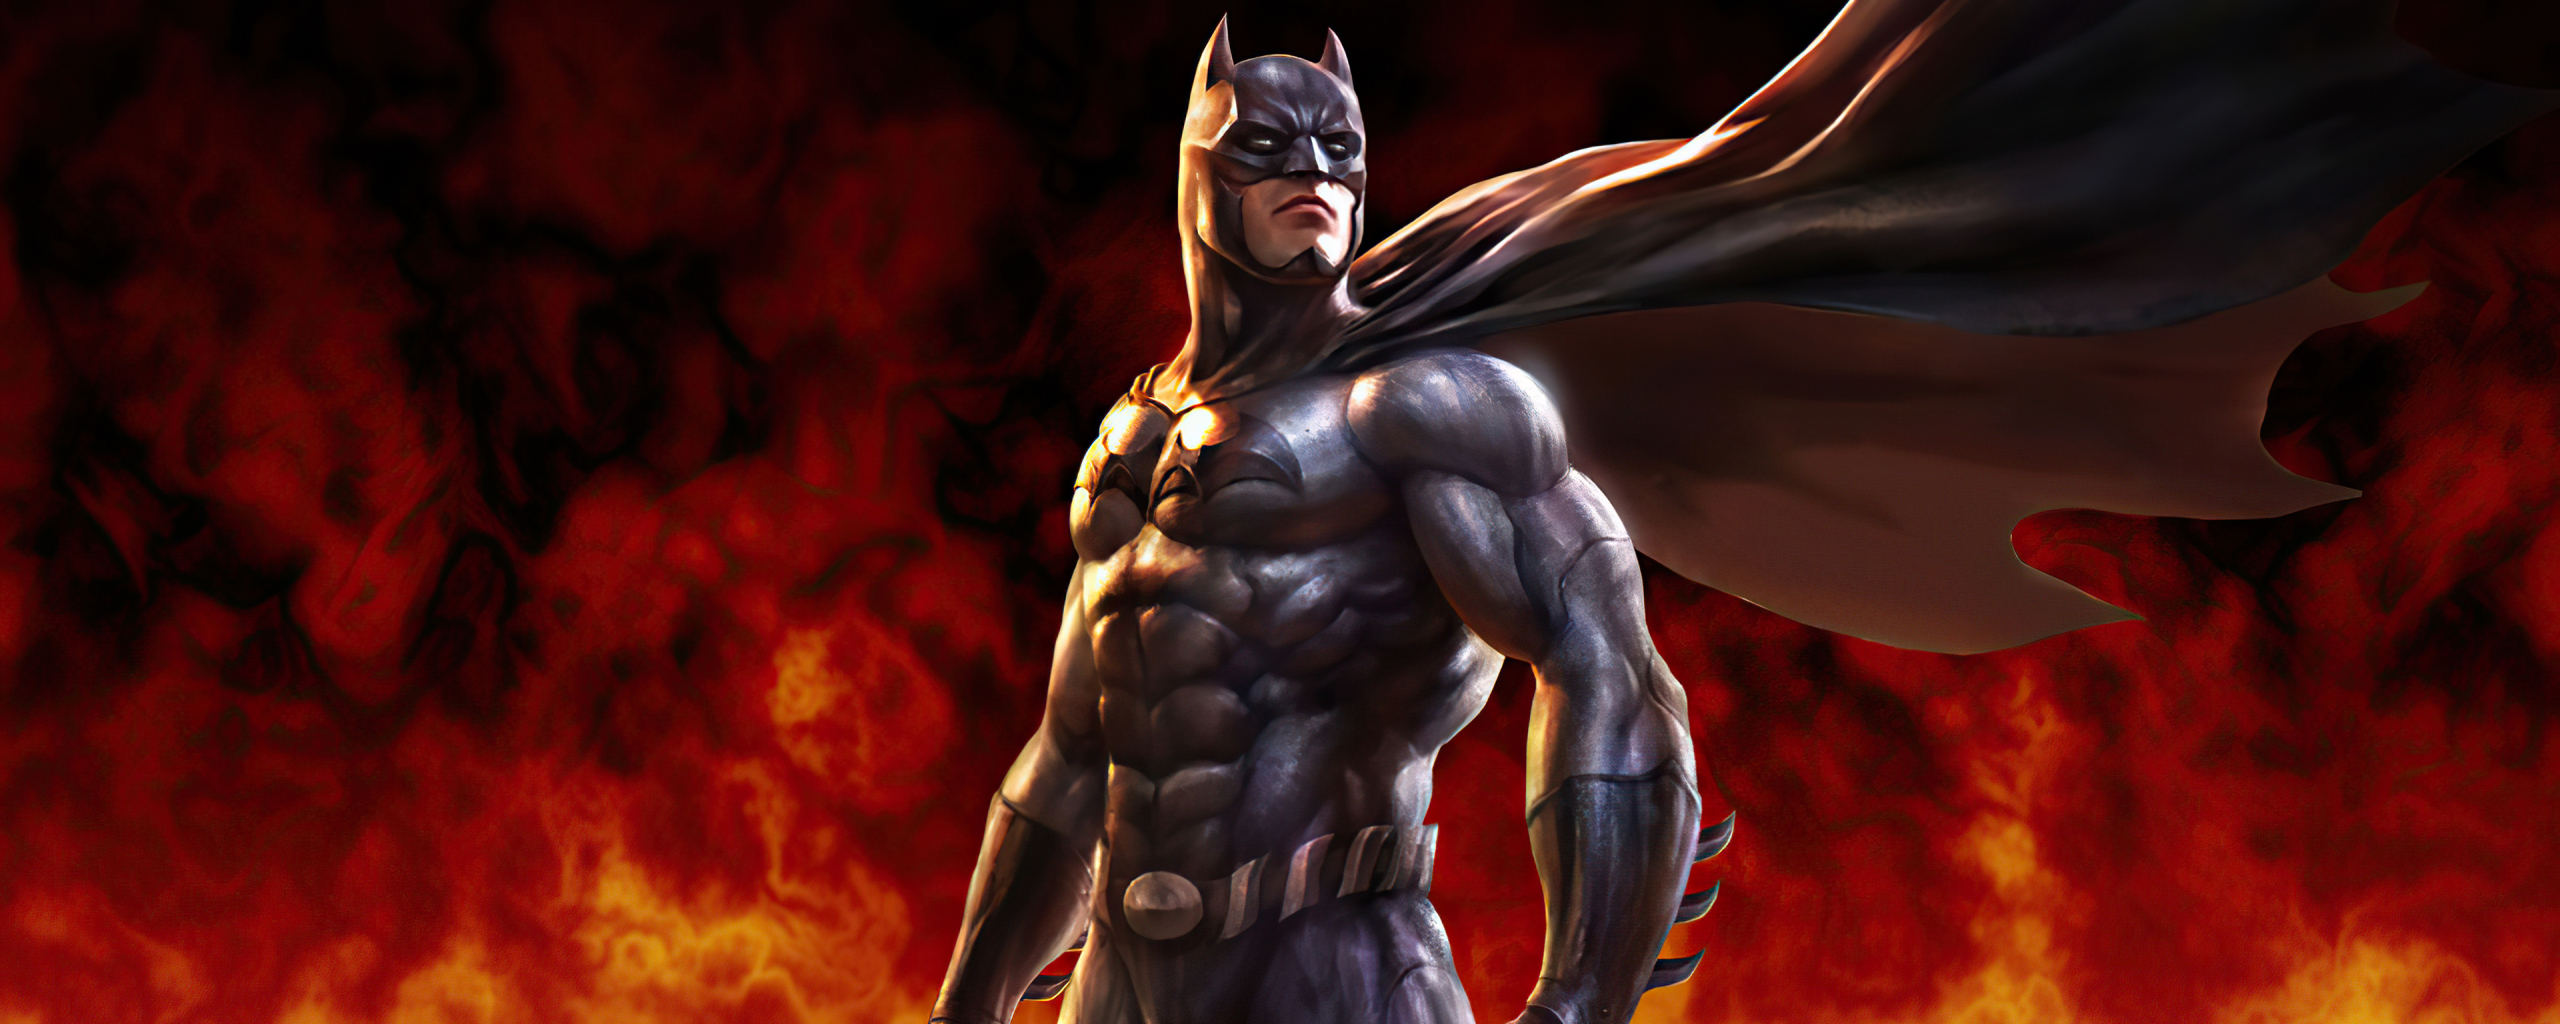 The Dark Knight Batman Art 4K HD Superheroes Wallpapers | HD Wallpapers |  ID #51147